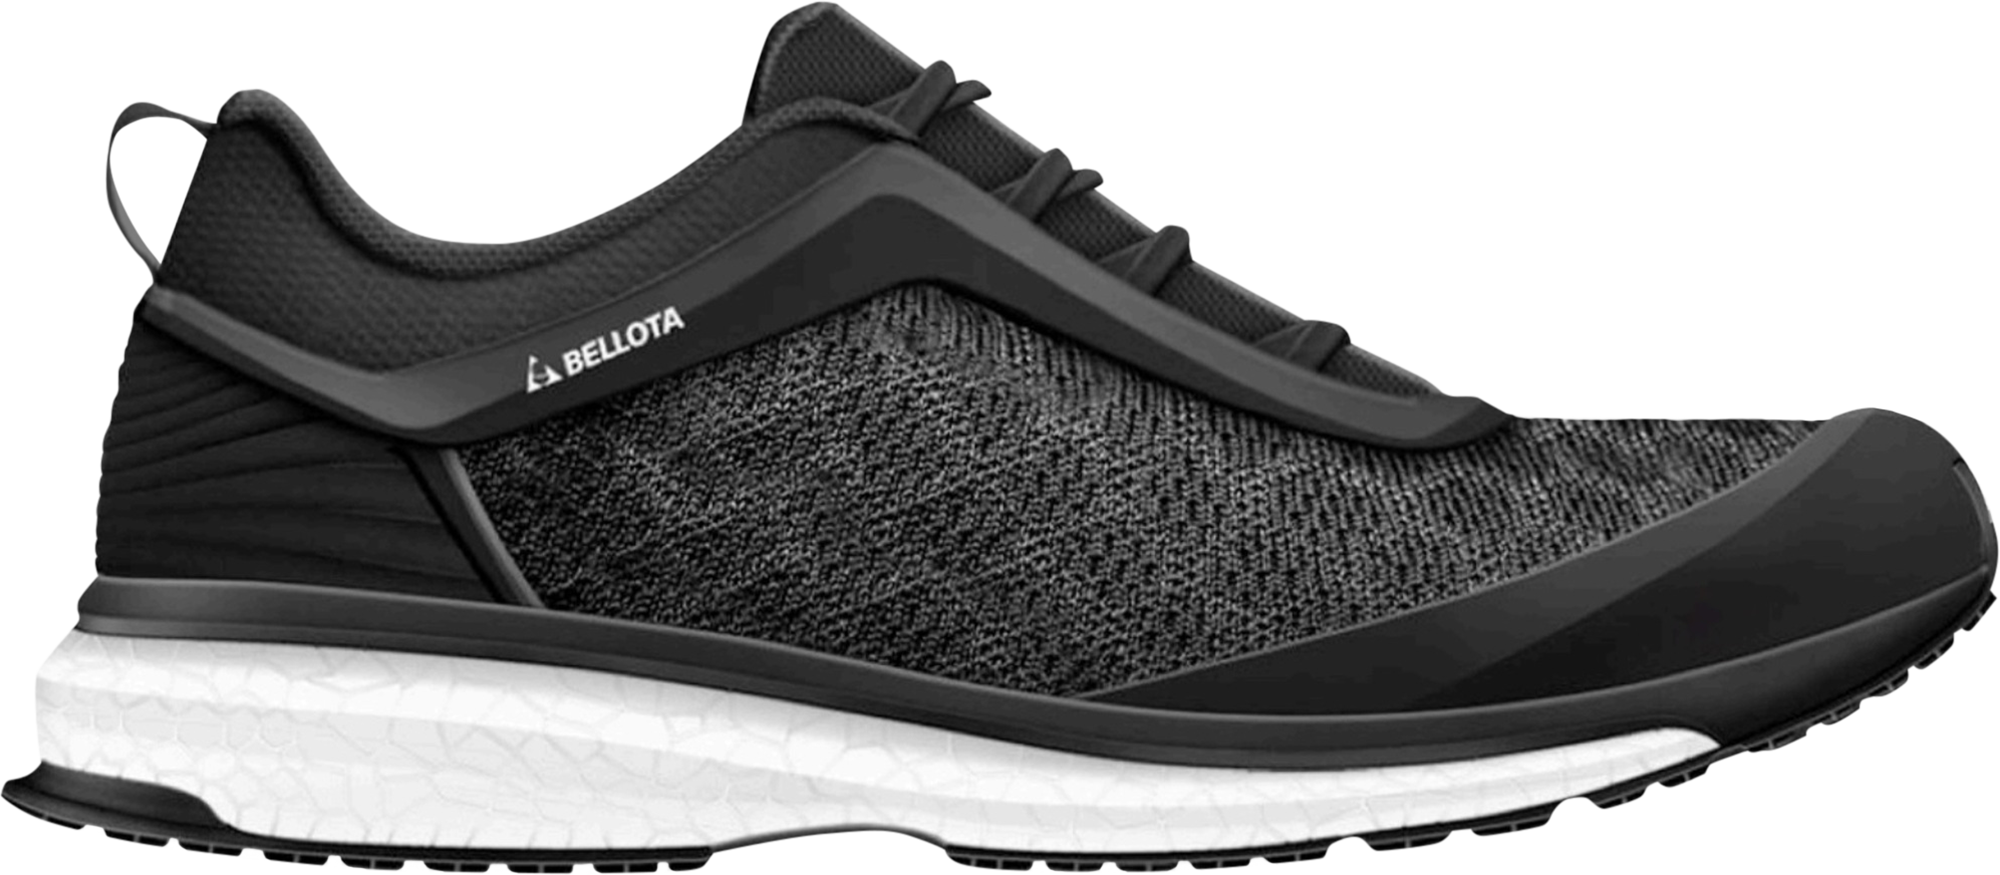 Zapatos de seguridad bellota 72224kb43s1p s1 negro / gris t43